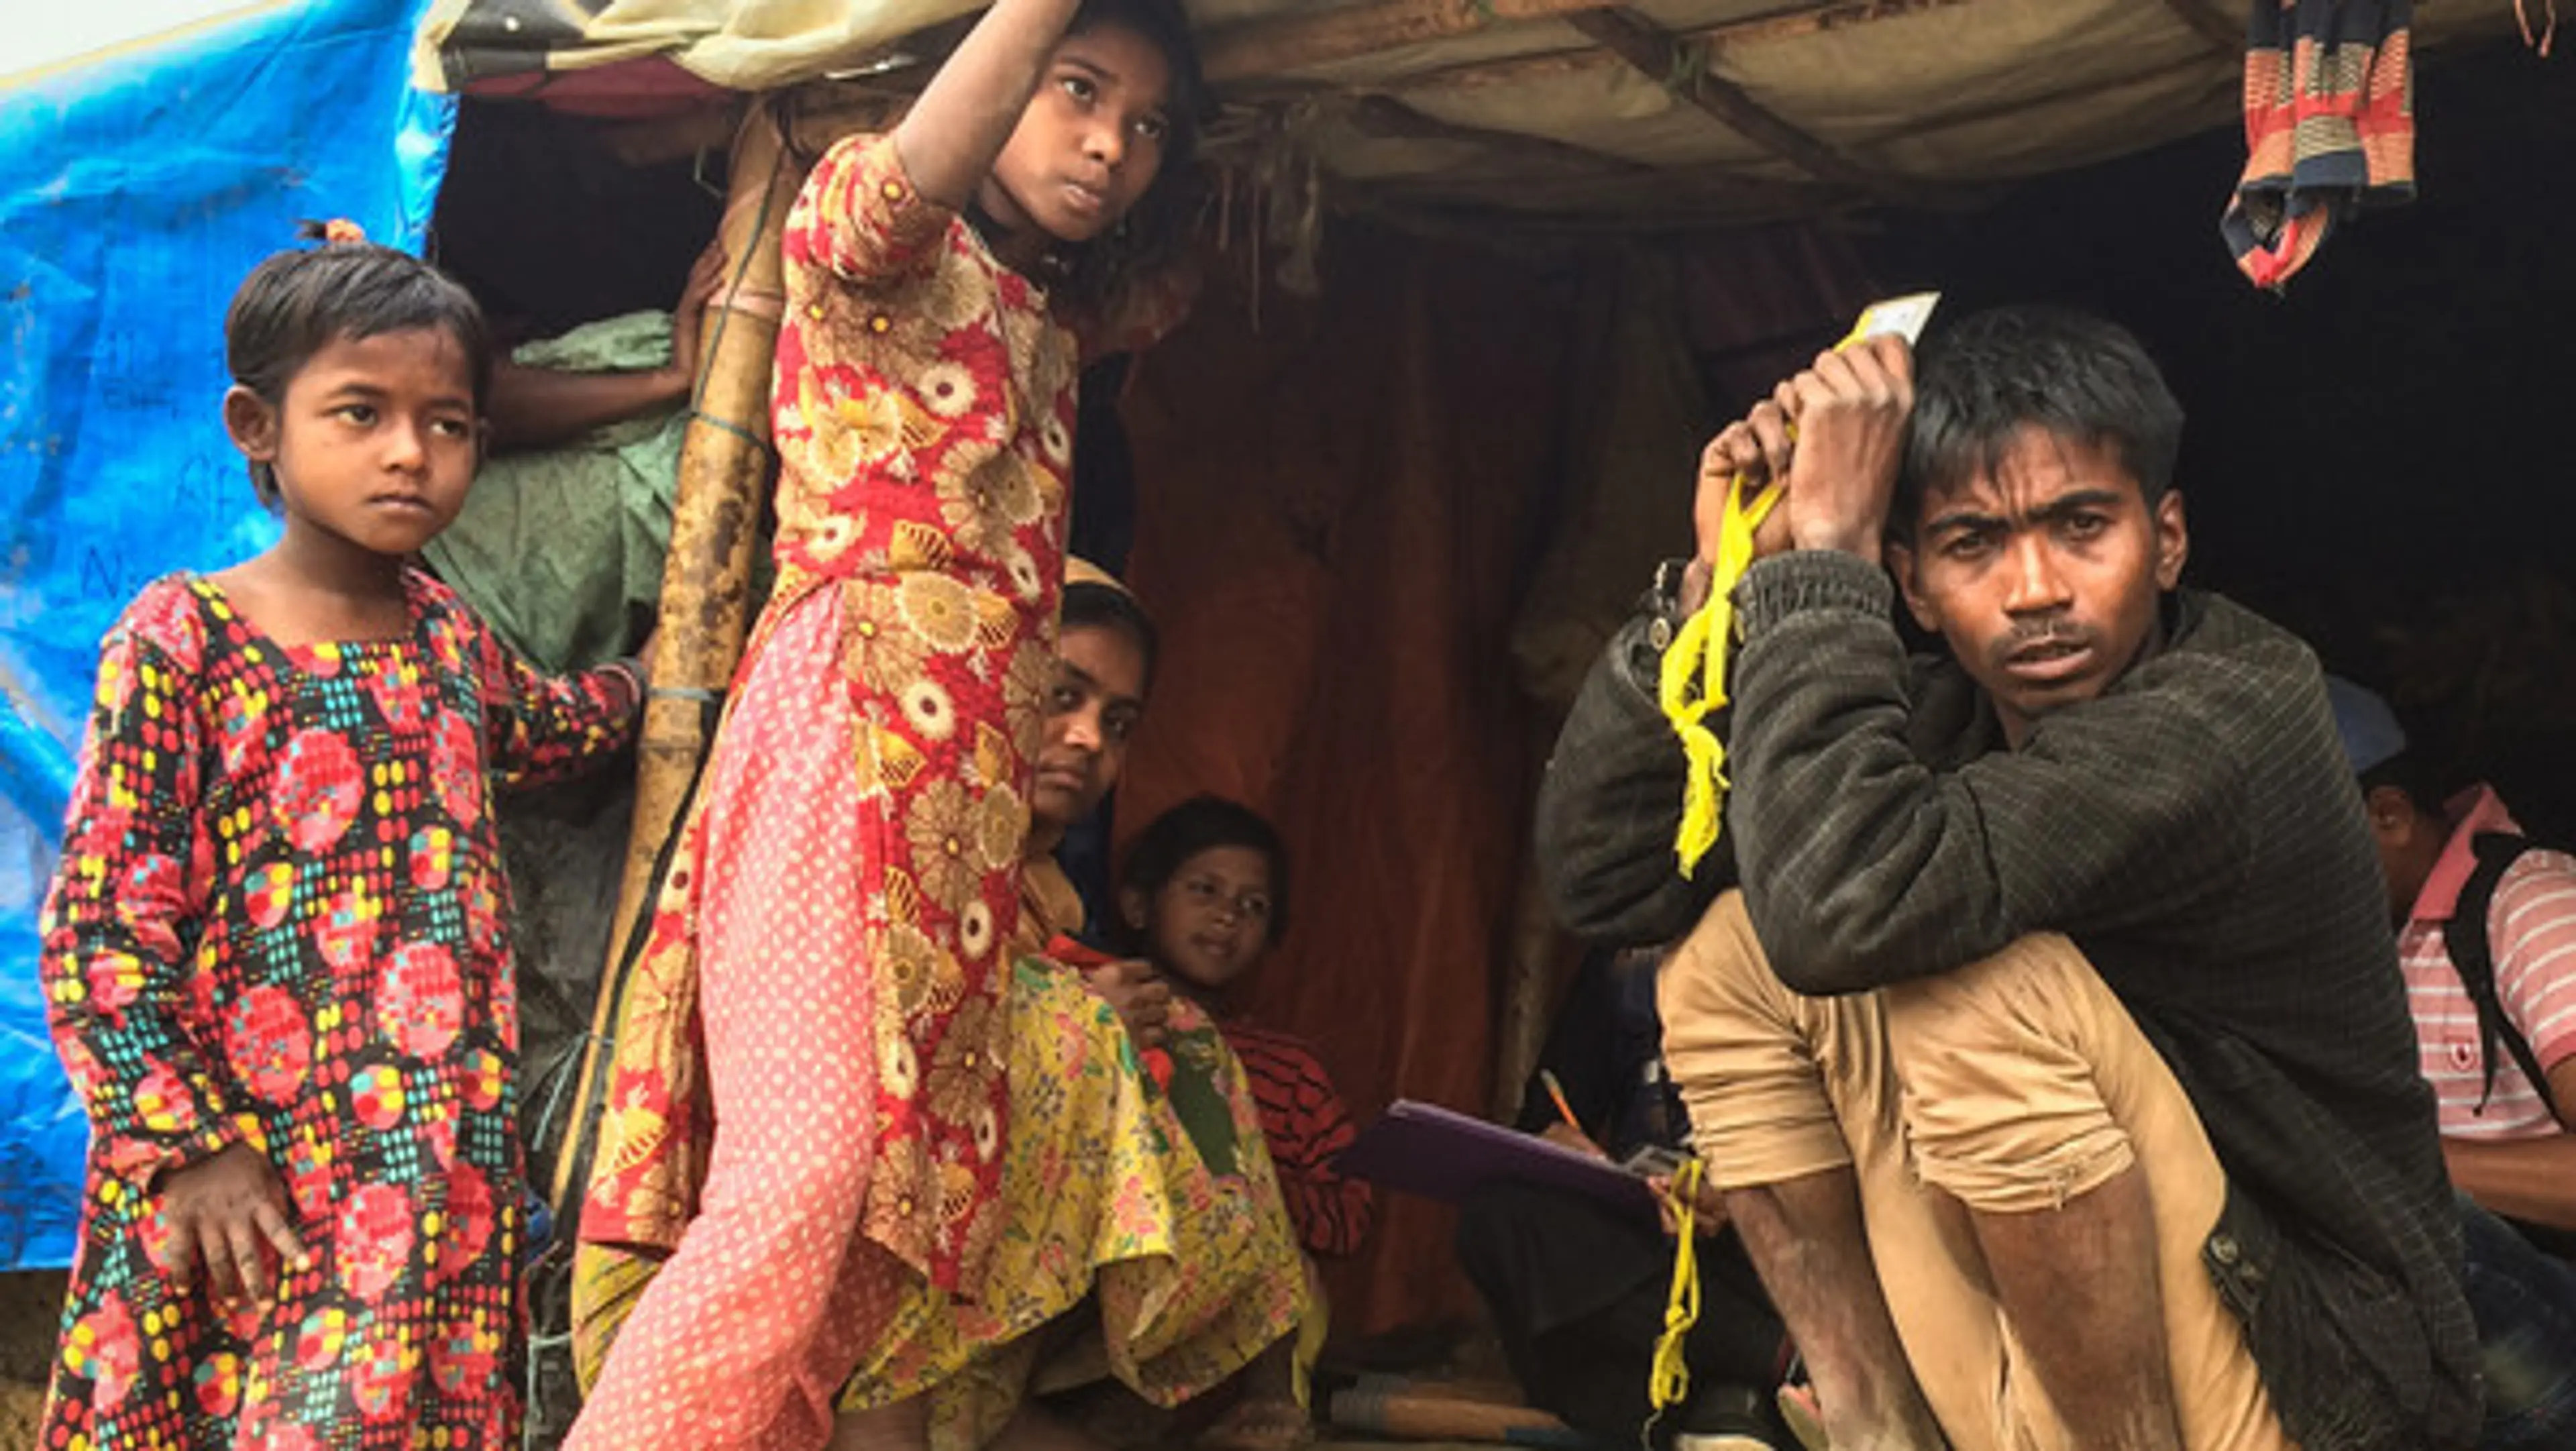 Asia - Bangladesh - Rohingya camp - man and children in poor housing